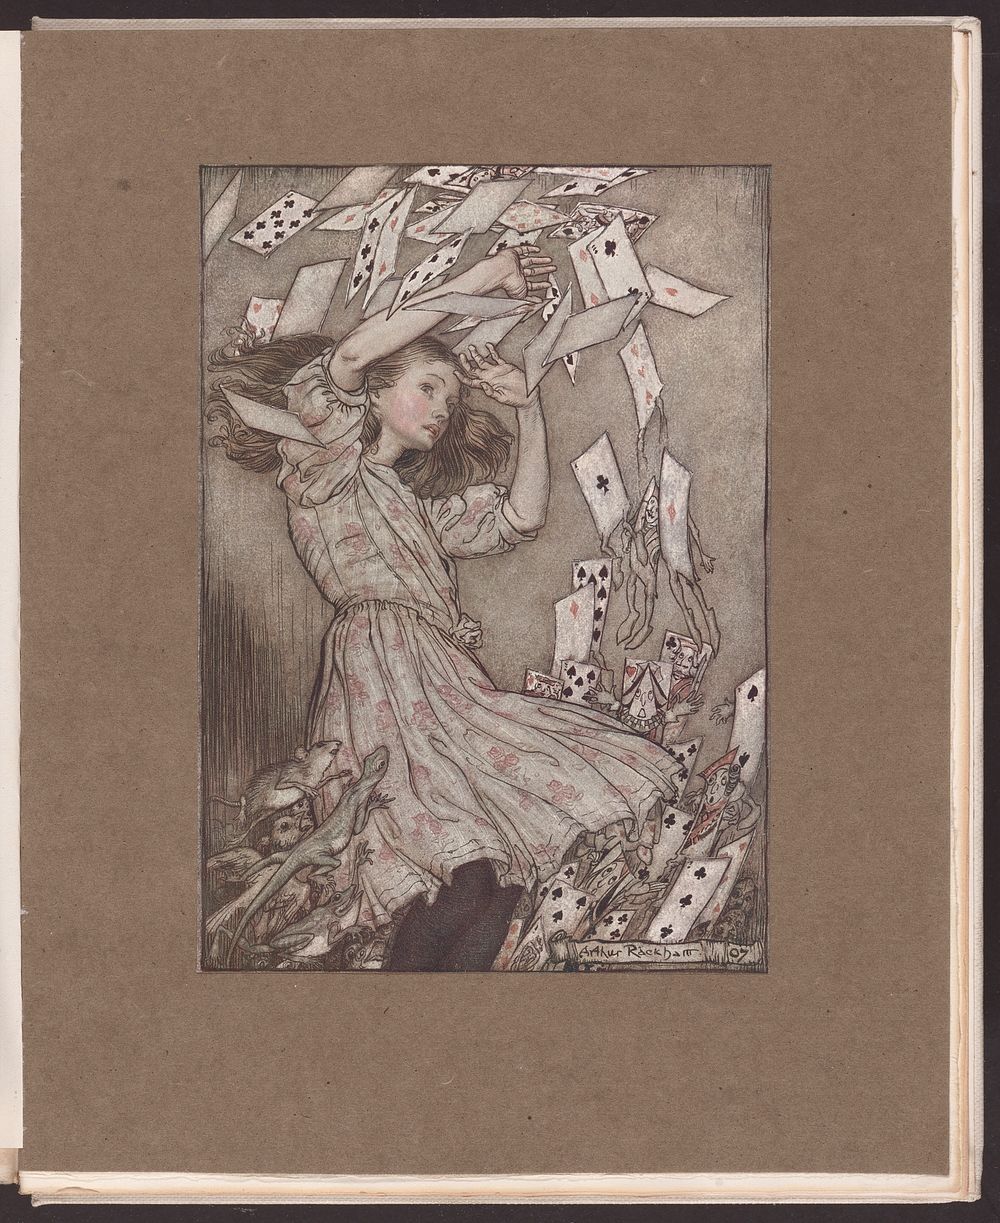 Alice's adventures in Wonderland (1907) print in high resolution by Lewis Carroll. 